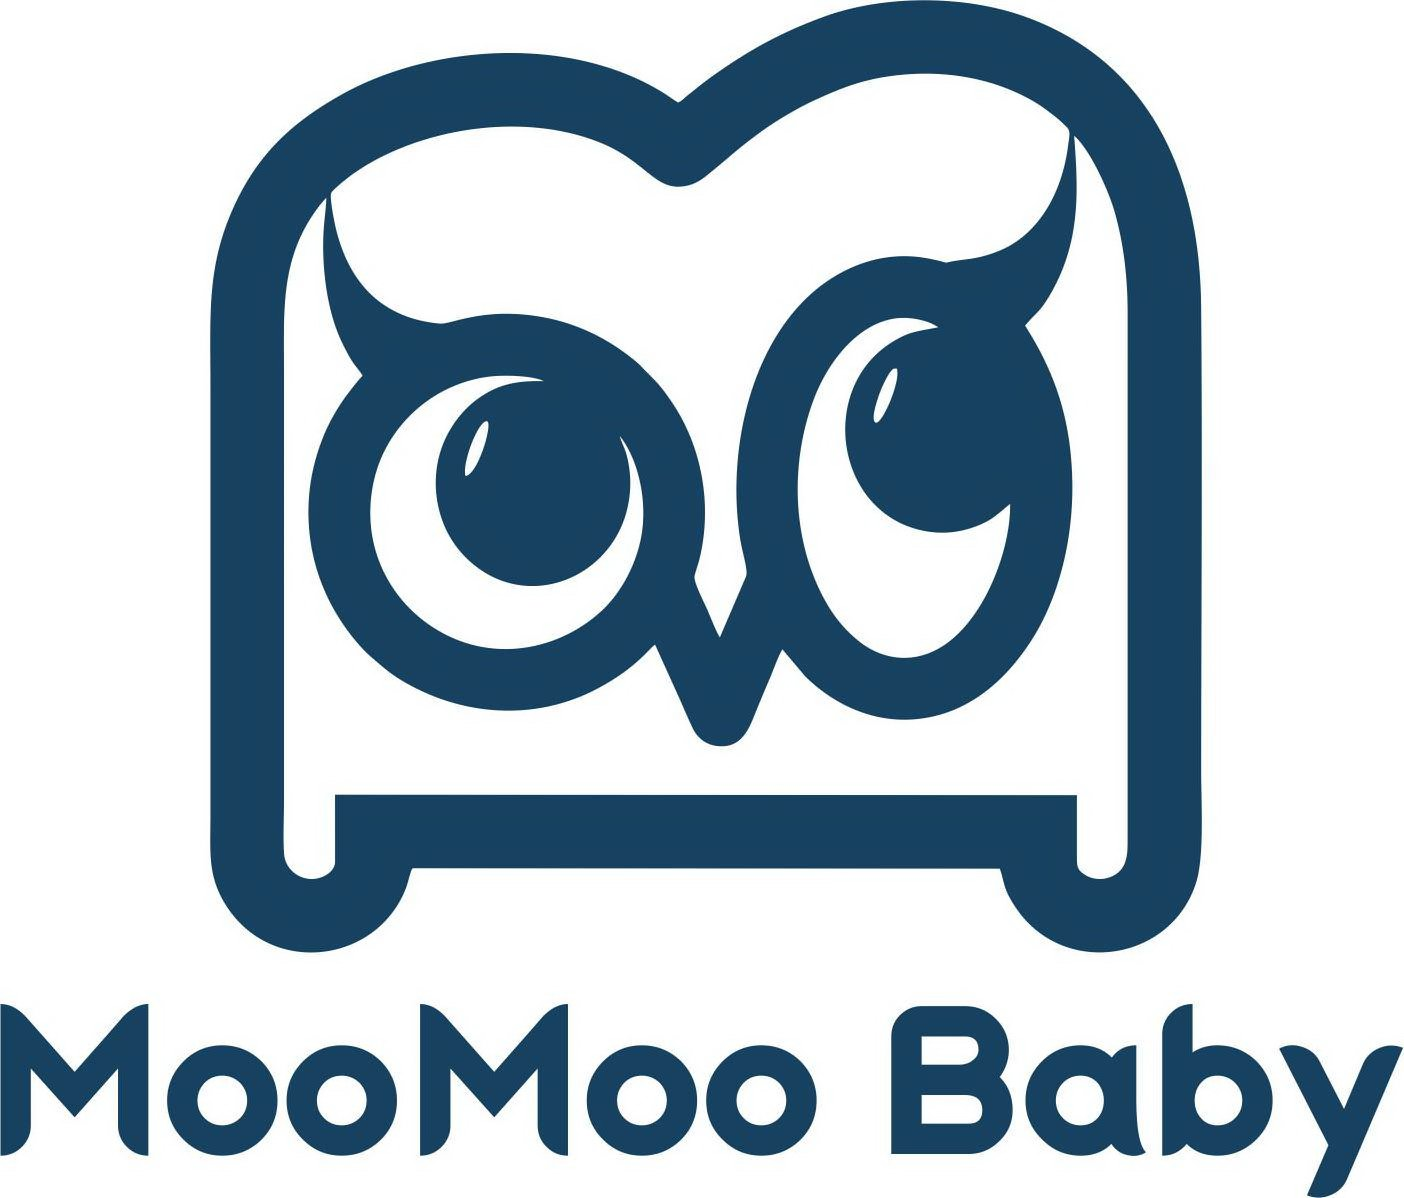 MOOMOO BABY - Shenzhen Oulisite Electronics Co., Ltd. Trademark Registration